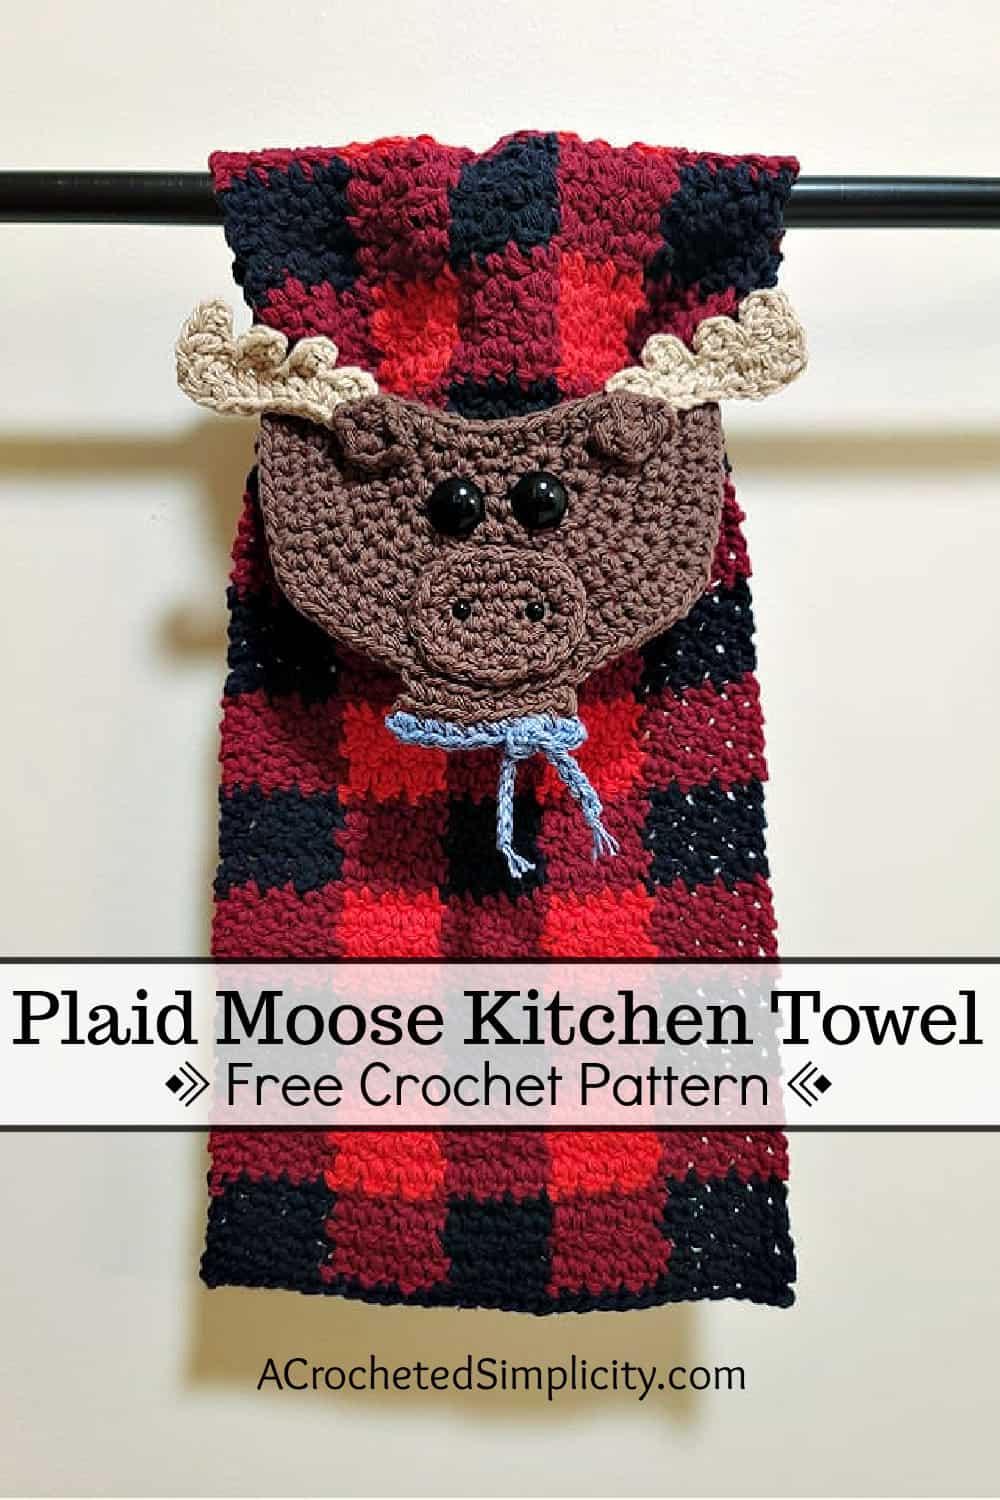 Free Crochet Pattern - Buffalo Plaid Moose Kitchen Towel by A Crocheted Simplicity #crochetplaid #freecrochetpattern #crochetmoose #crochetkitchentowel #freecrochetmoose #freecrochettowel #plaidmoose #plaiddecor #buffaloplaid #buffaloplaidcrochet #plaidkitchentowel #plaidmoosedecore